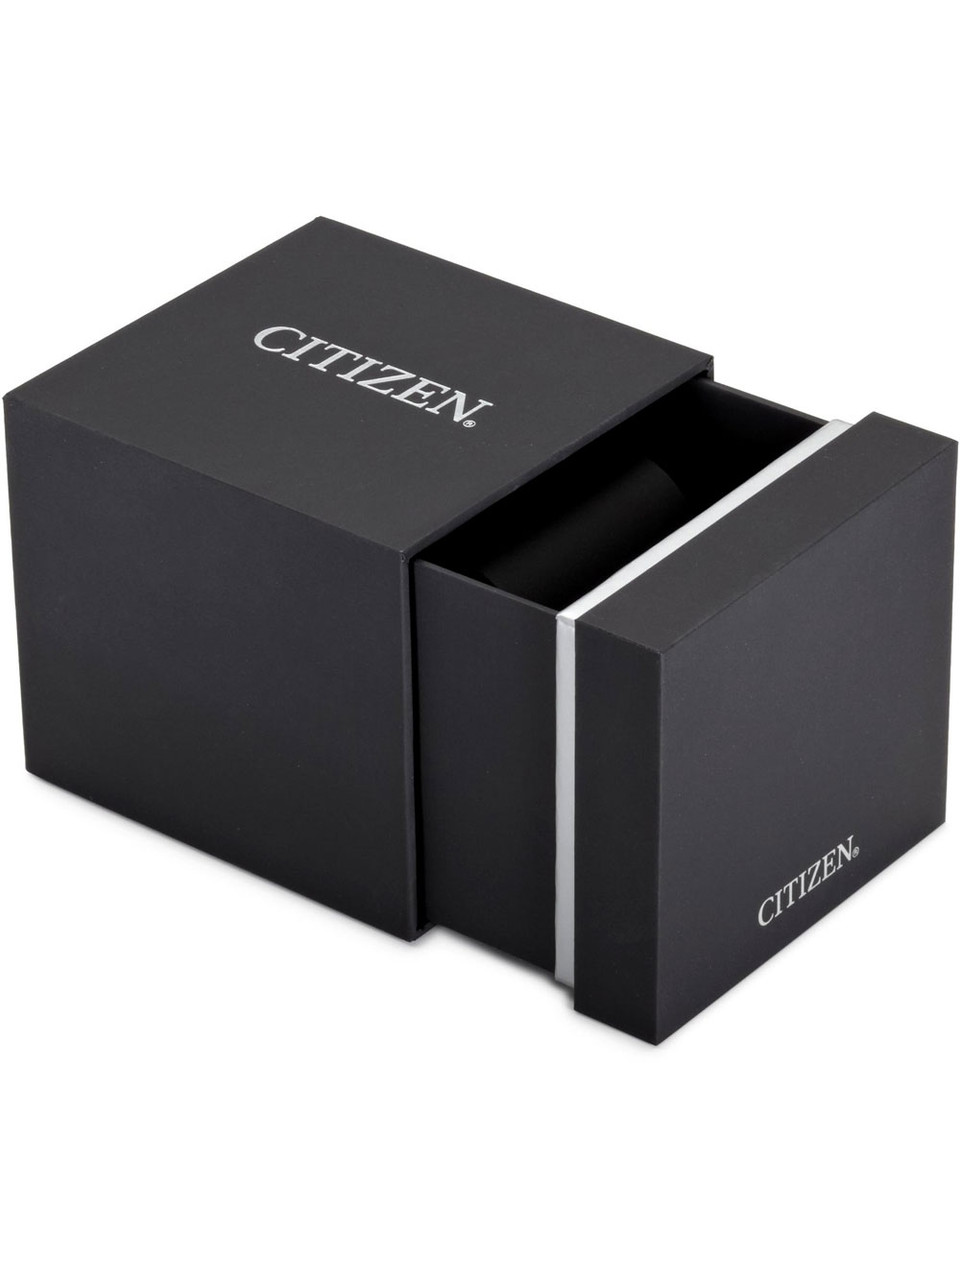 Citizen CA0700-86L Eco-Drive Super-Titanium Chronograph 43mm 10 ATM -  owlica | Genuine Watches